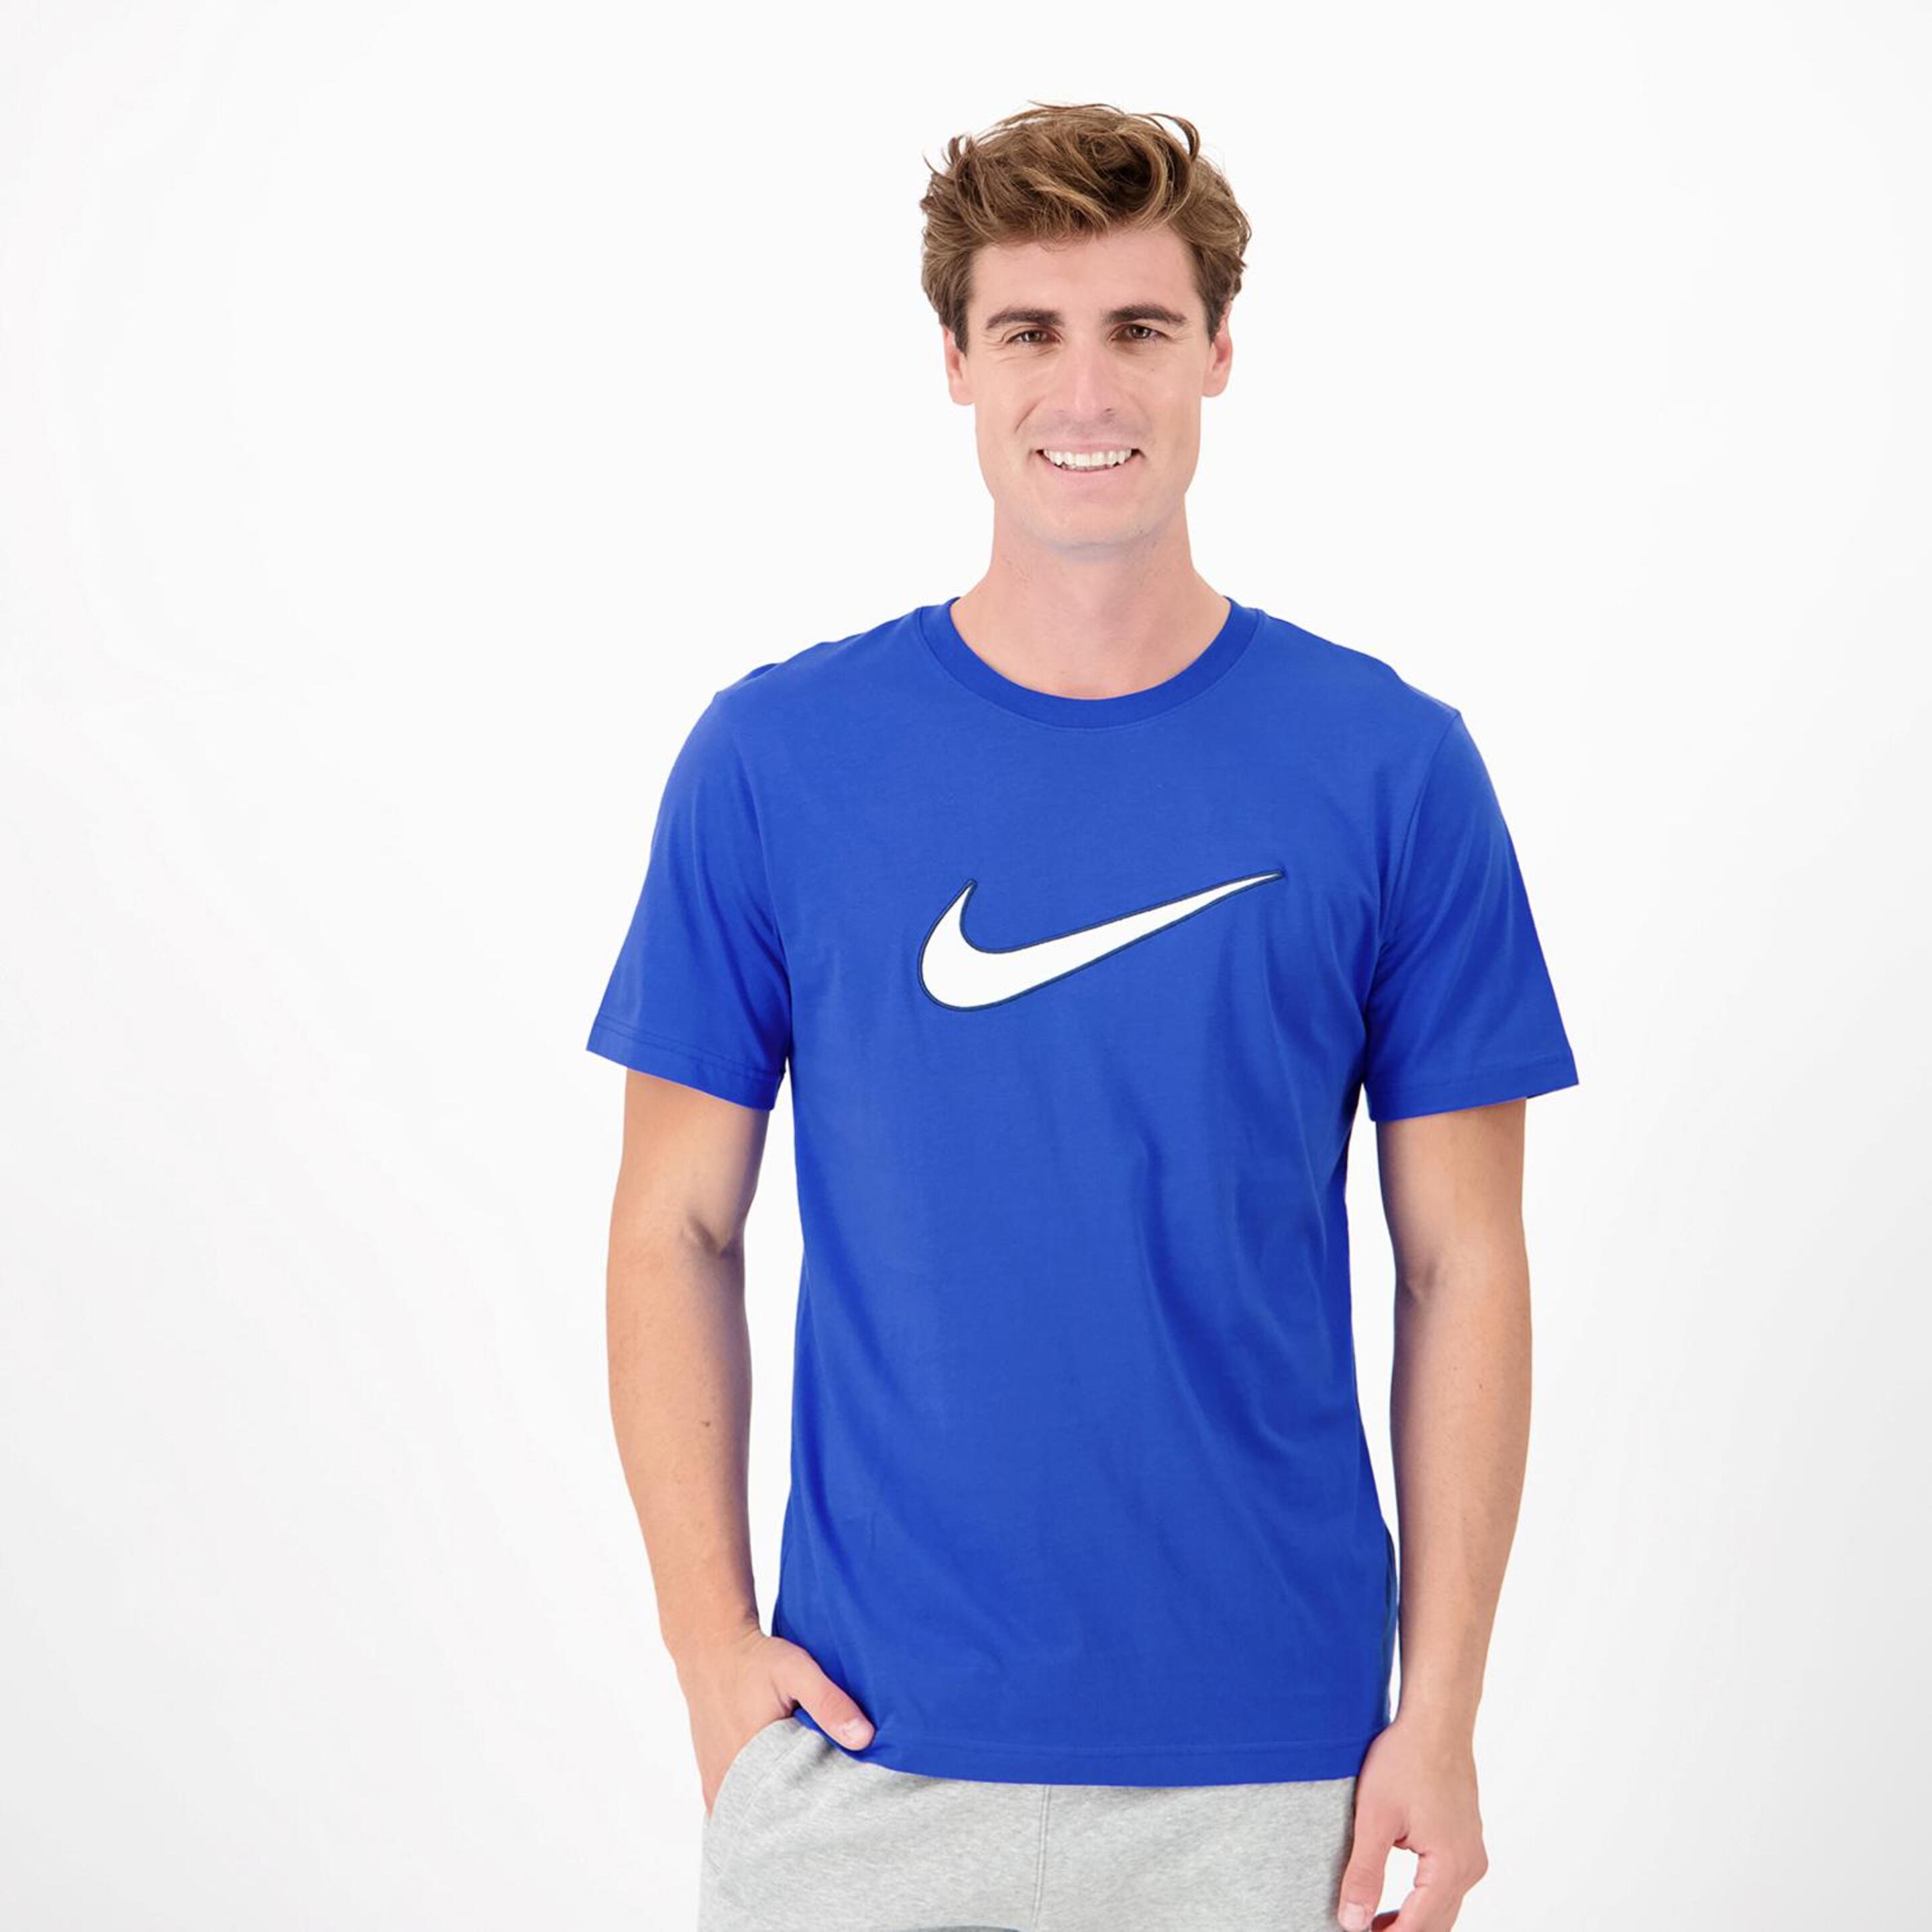 Nike Sport - azul - Camiseta Hombre